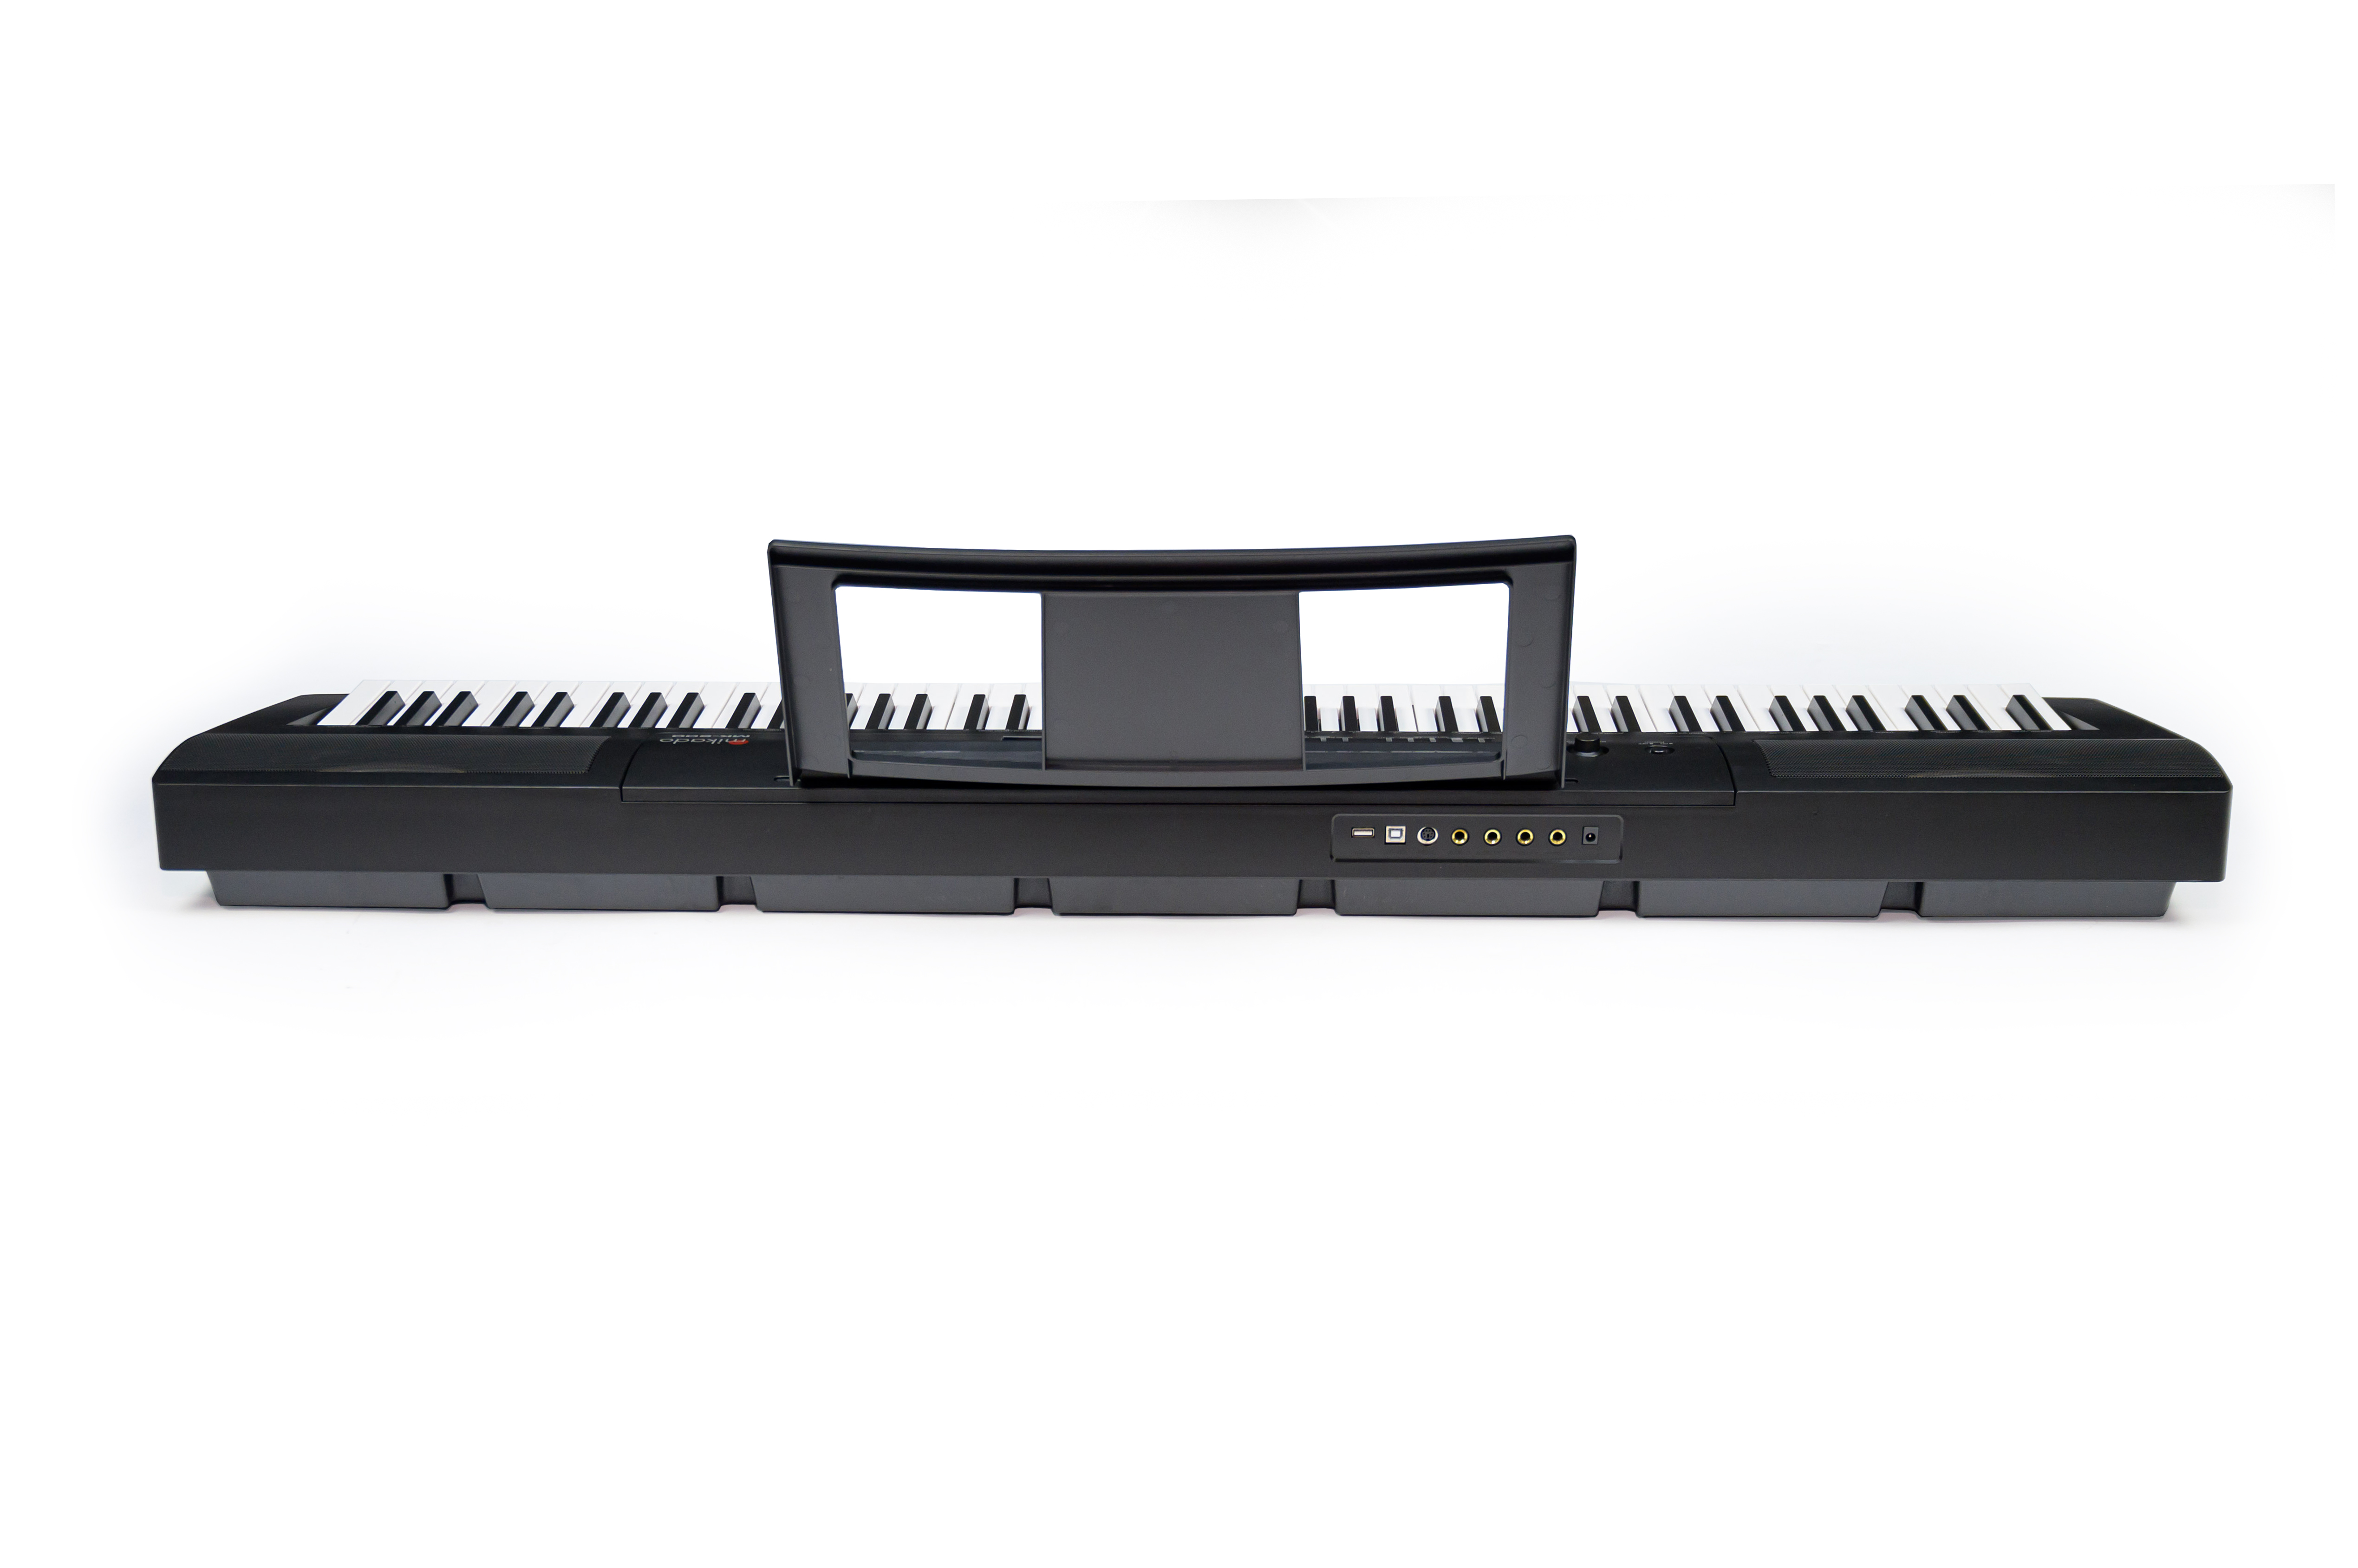 Mikado MK-600B Синтезатор 88 клавиш. купить в prostore.me